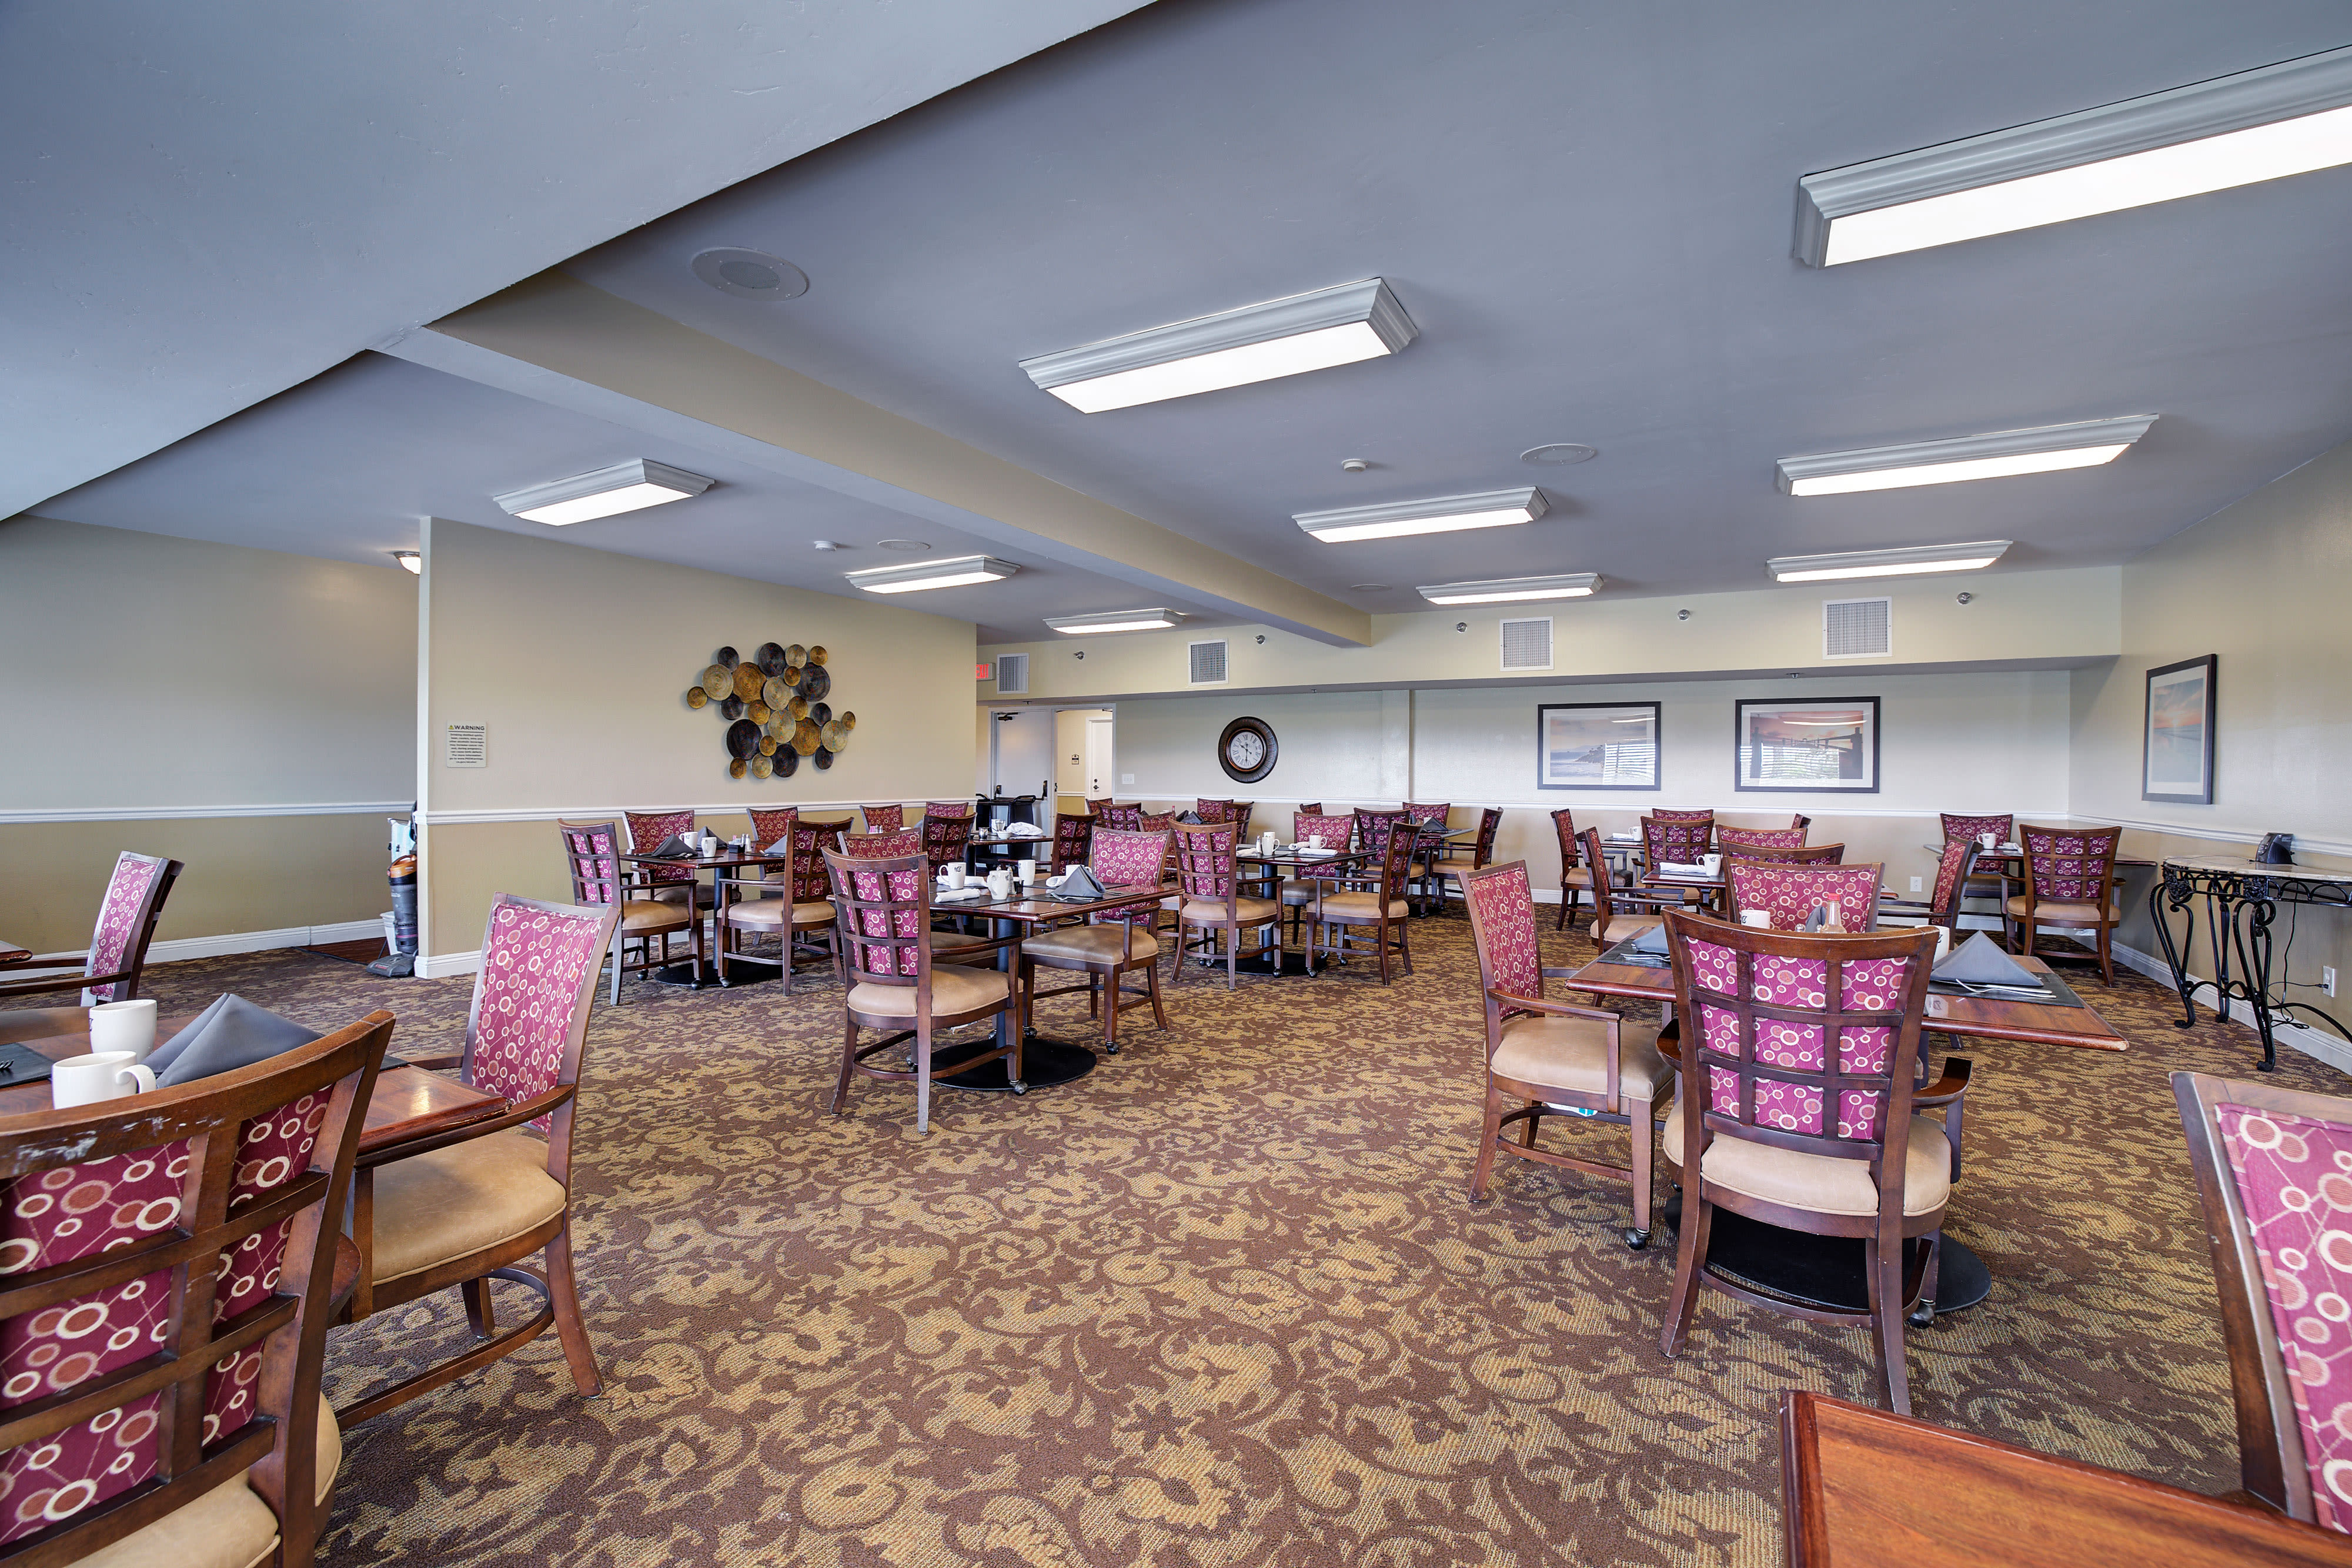 Plentiful seating in dining hall at Pacifica Senior Living Encinitas in Encinitas, California